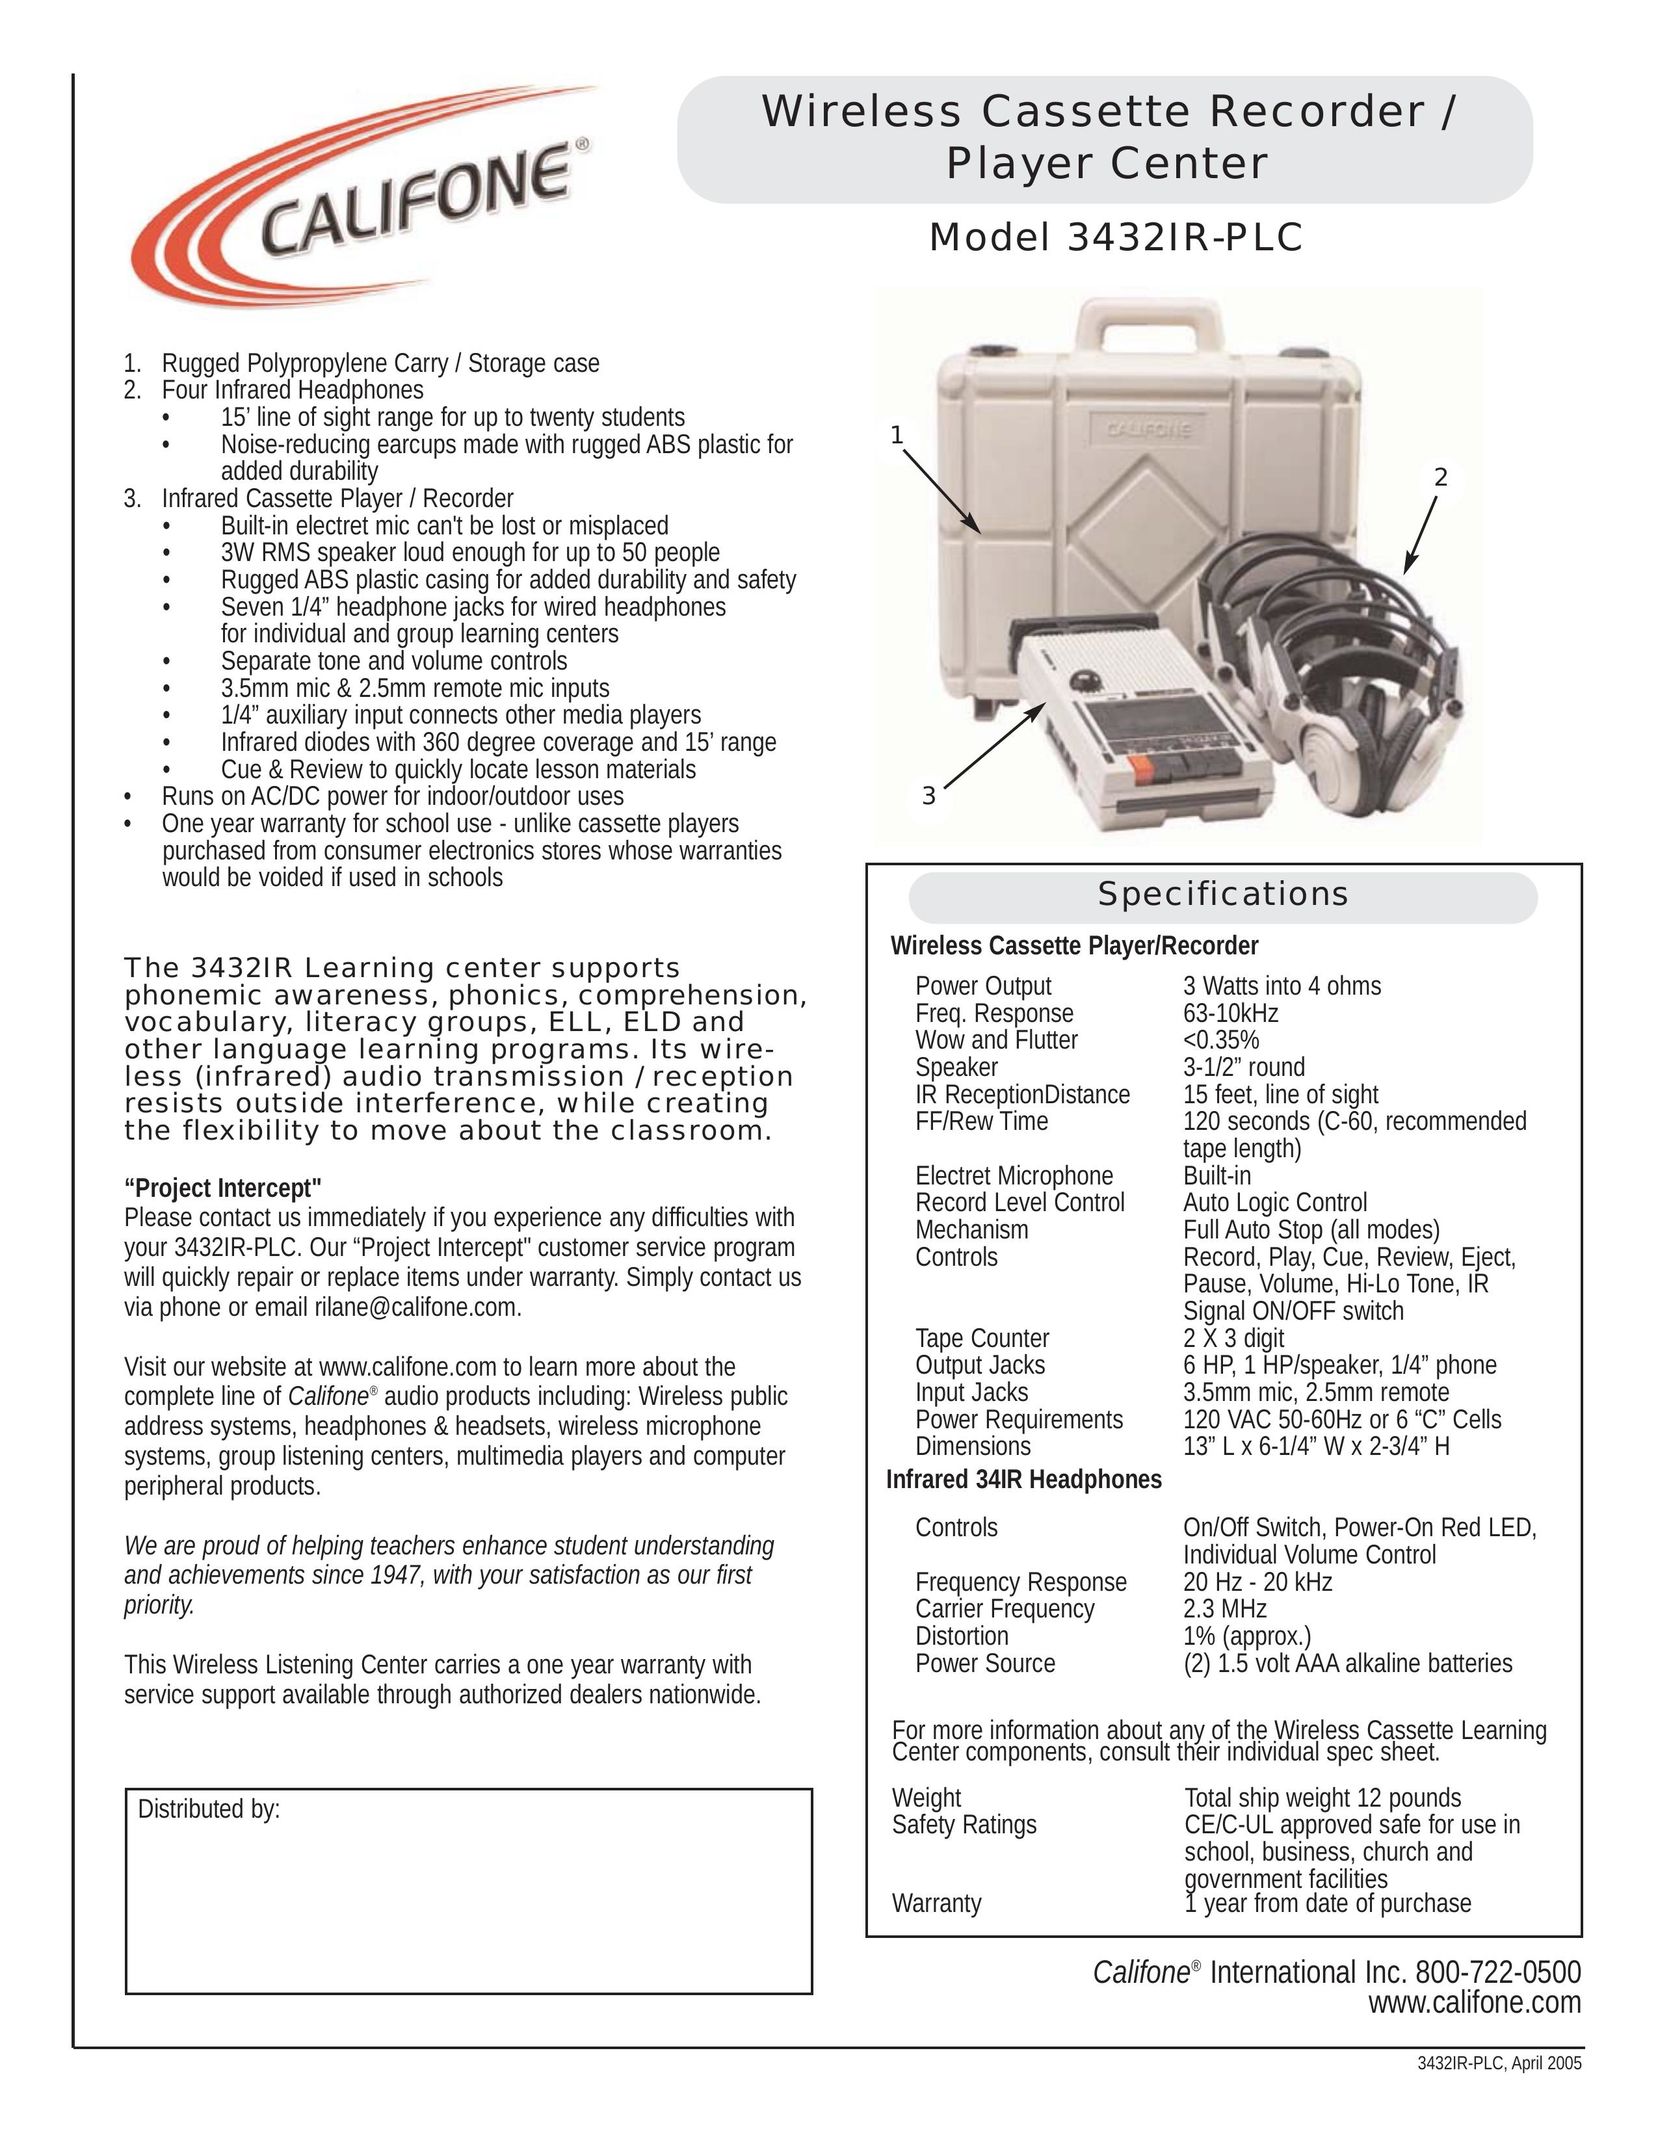 Califone 3432IR-PLC Cassette Player User Manual (Page 1)